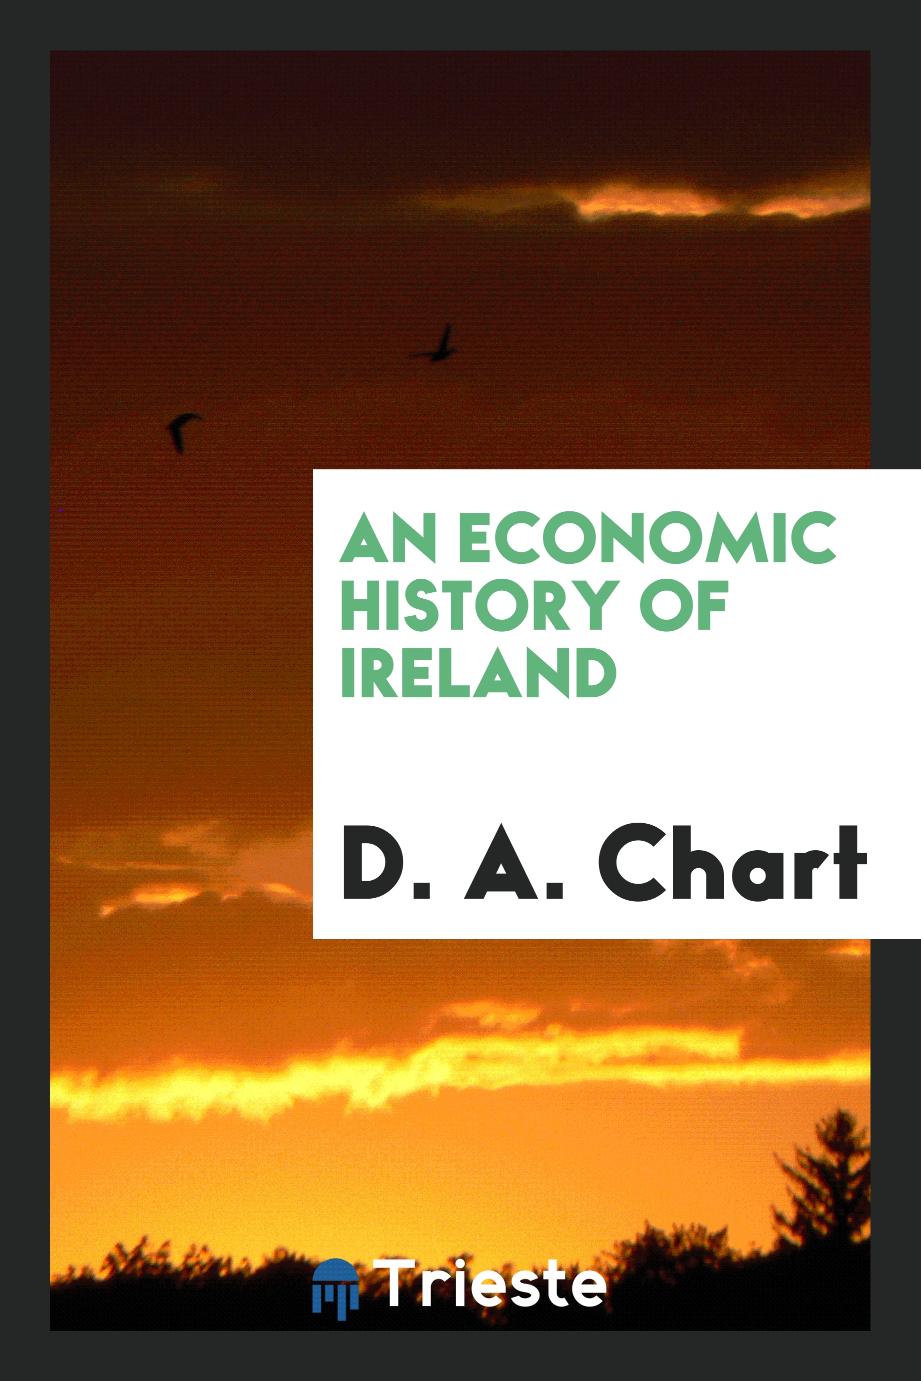 An economic history of Ireland